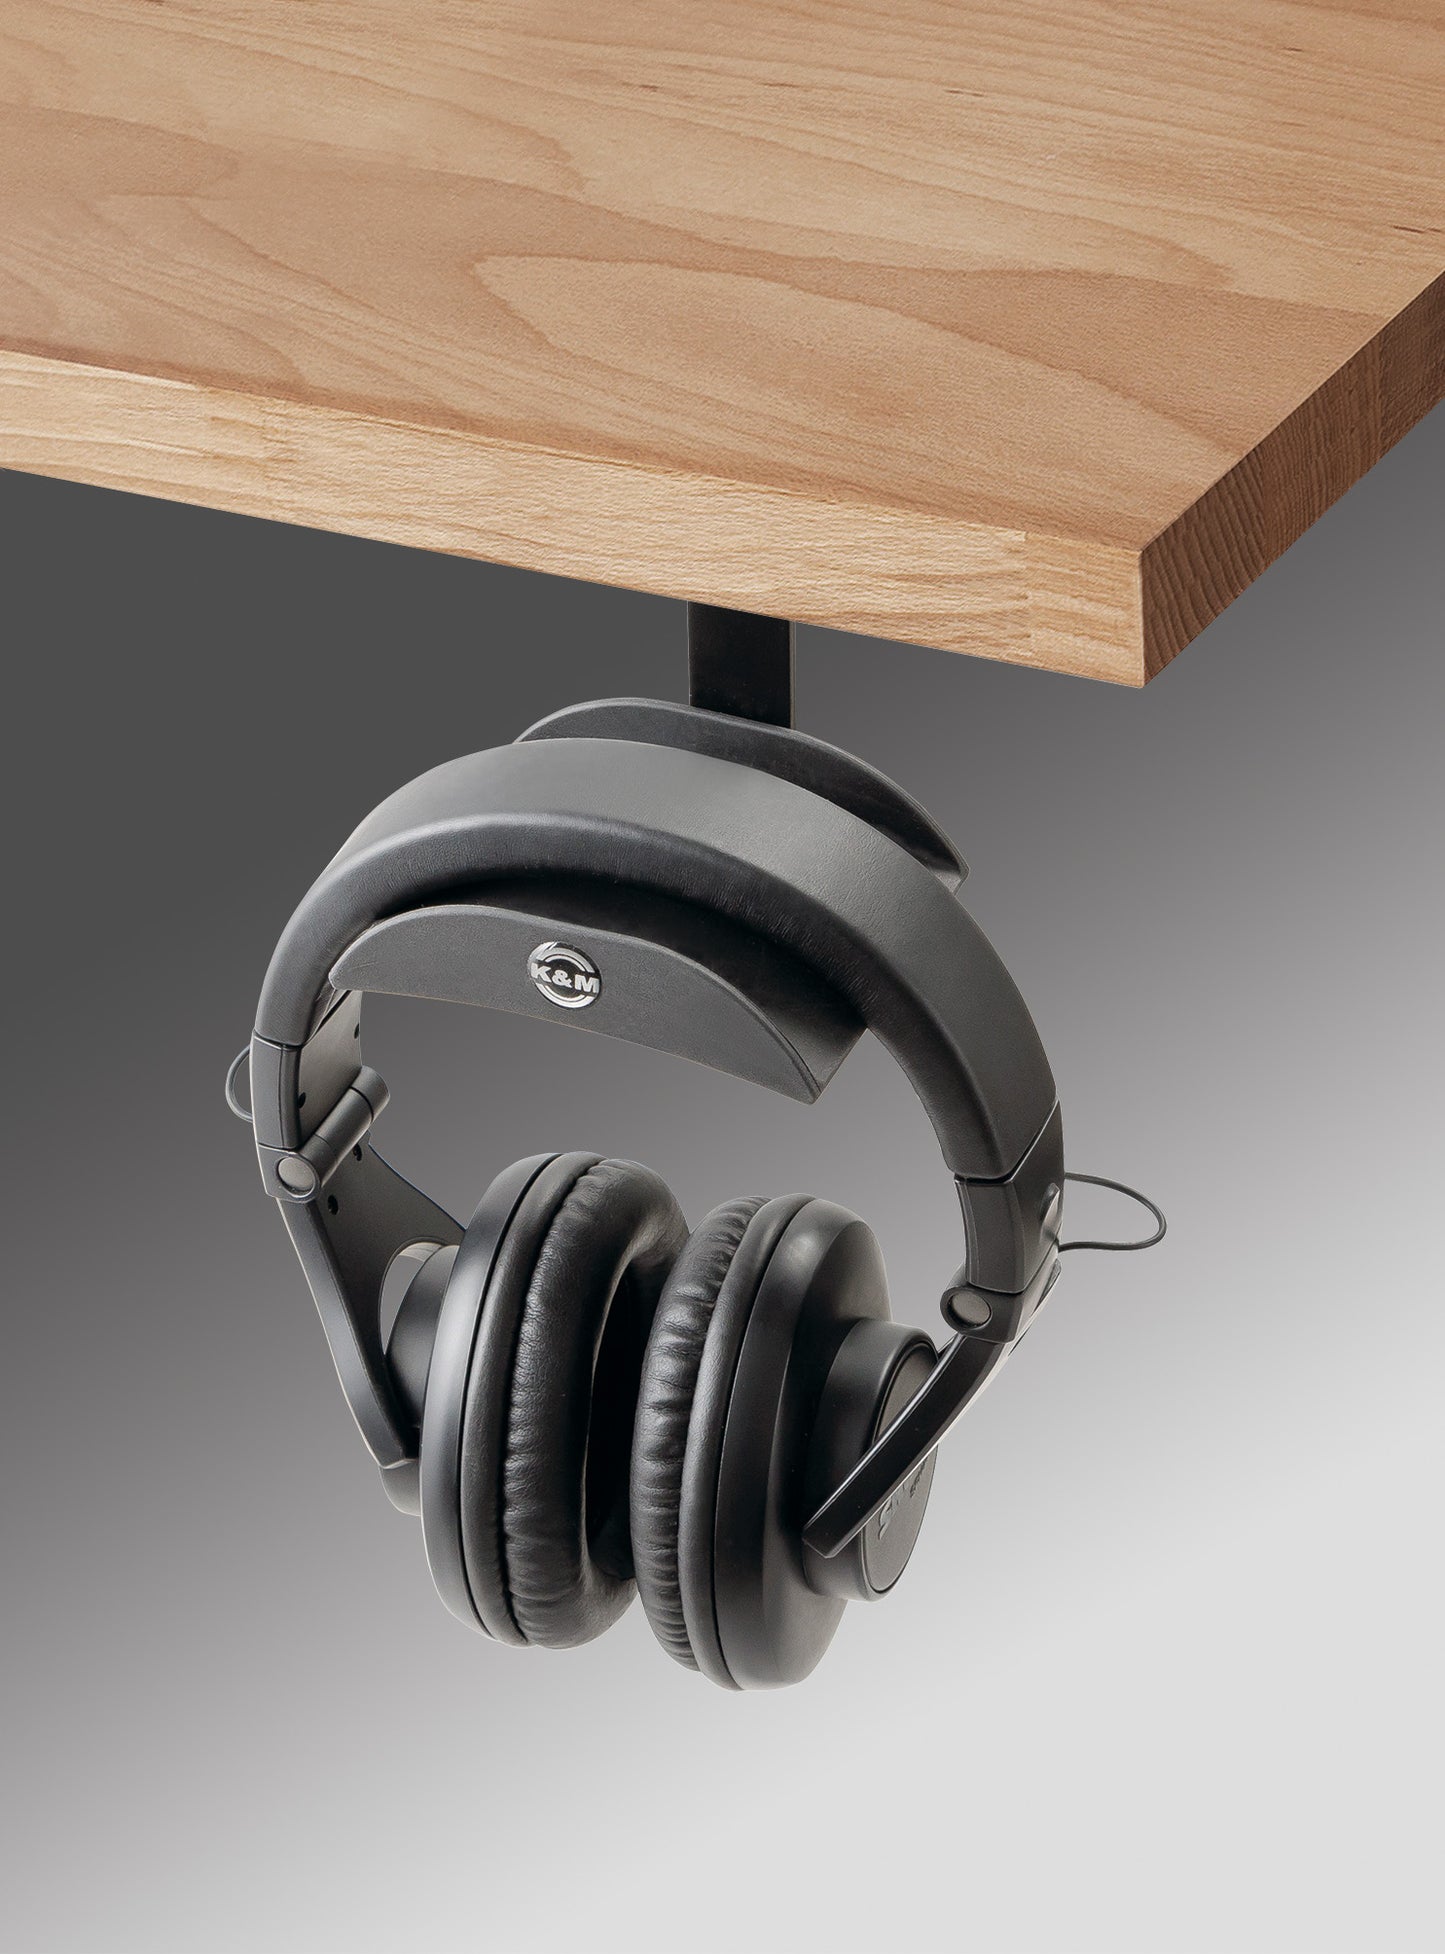 K&M audio 16330 under a wooden desk, lifestyle